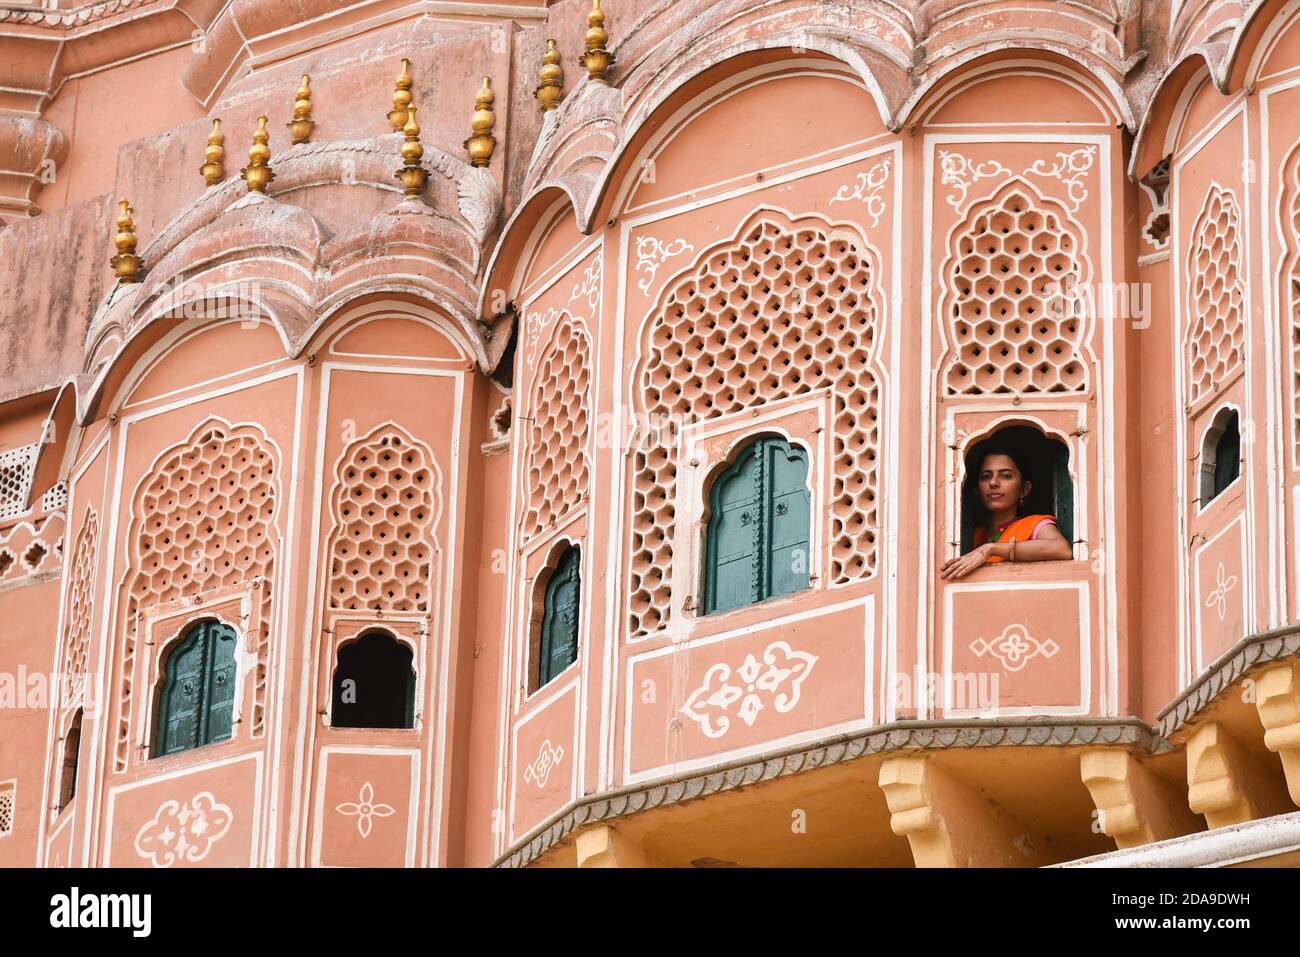 Frau Tourist an Hawa Mahal Fenster oder Rahasthan Palast der Winde oder Brise. royal Frauen zu beobachten Street Festival Jaipur, Rajasthan, Nordindien. Stockfoto